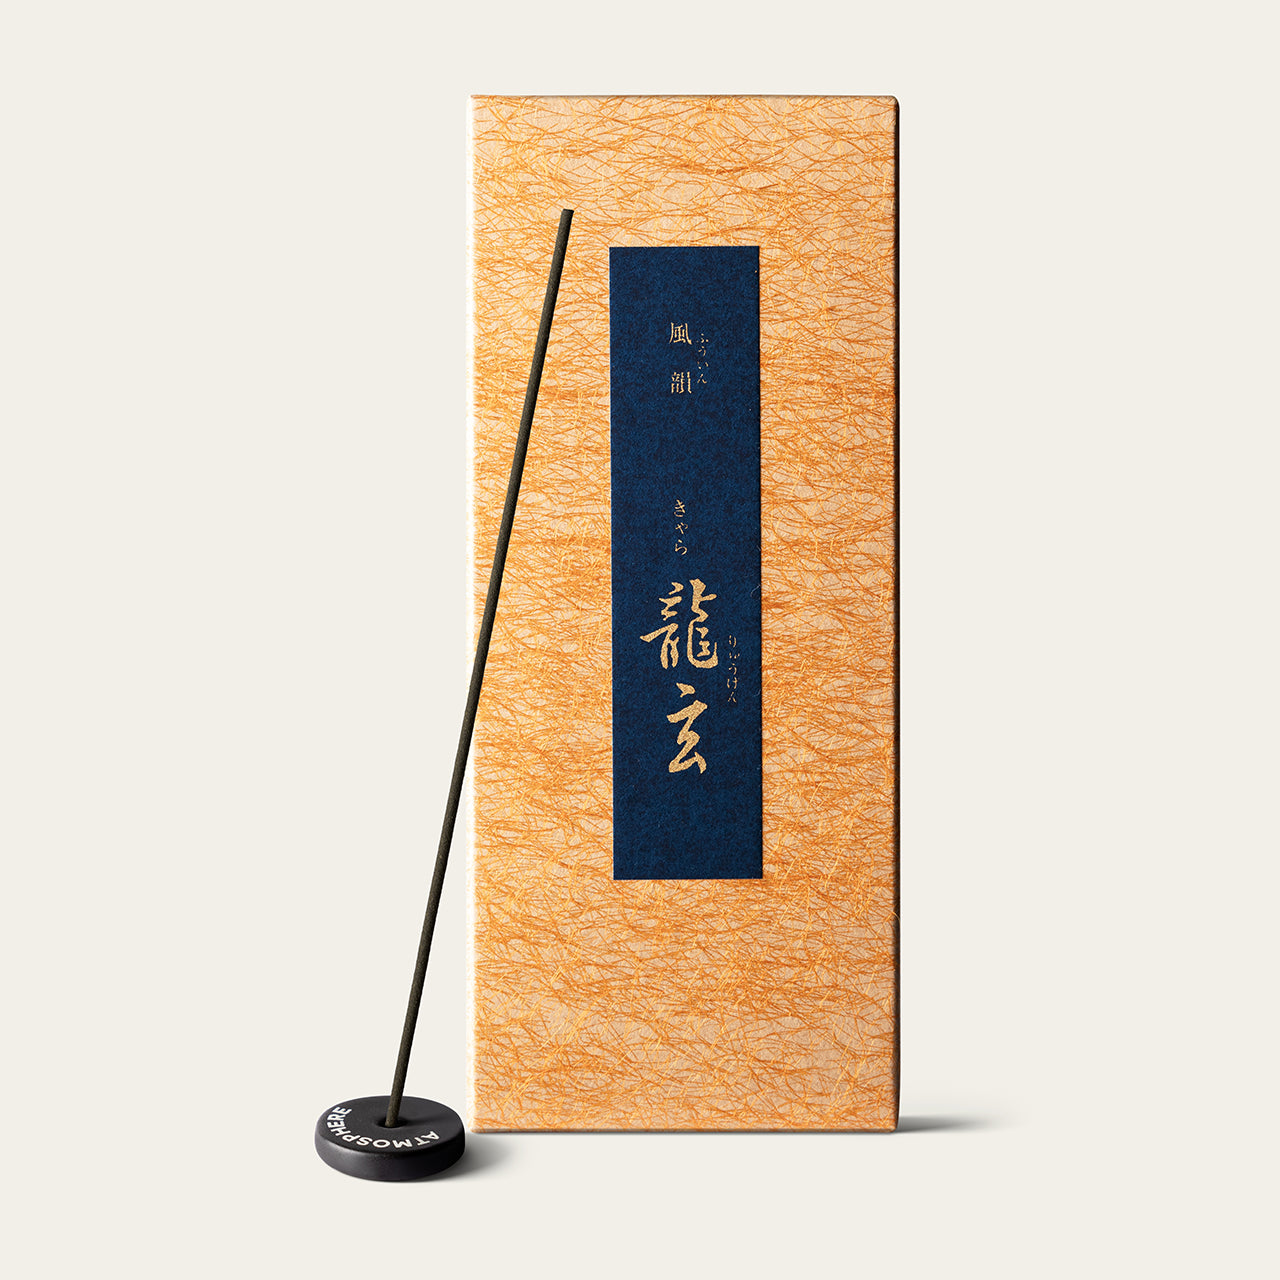 Minorien Fuin Fu-In Kyara Ryugen Japanese incense sticks (12 sticks) with Atmosphere ceramic incense holder